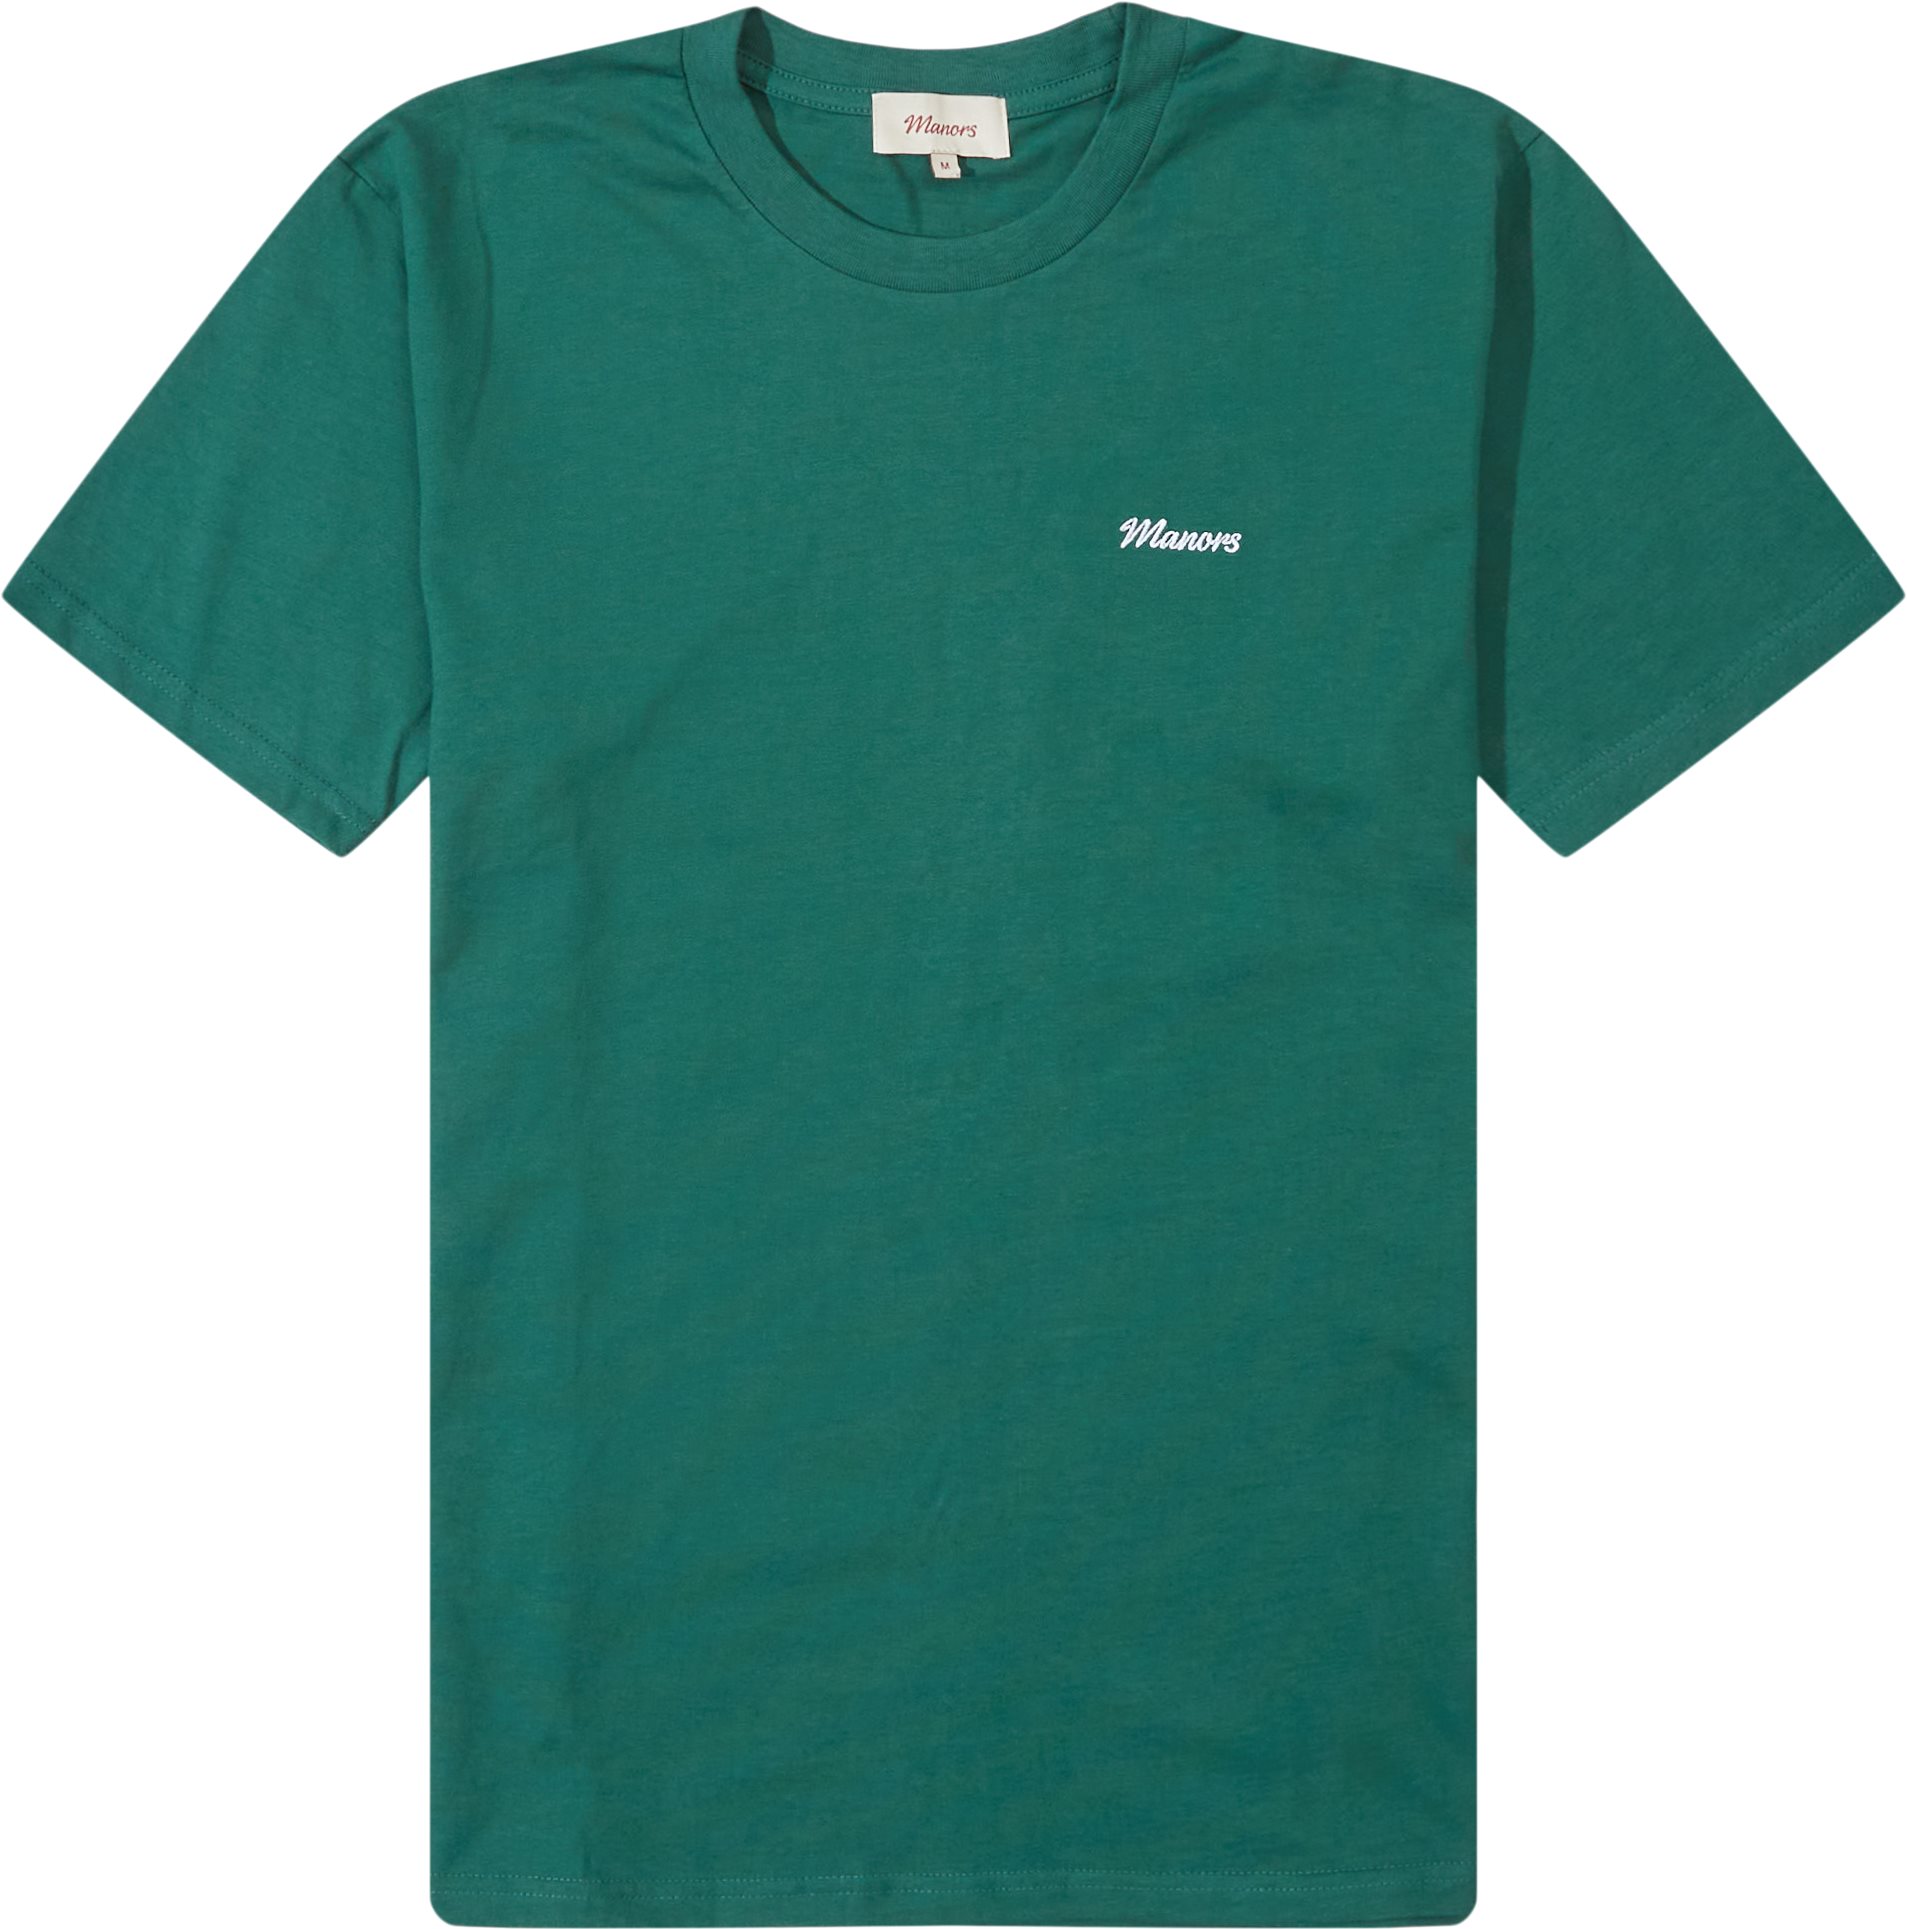 Classic Tee - T-shirts - Regular fit - Green